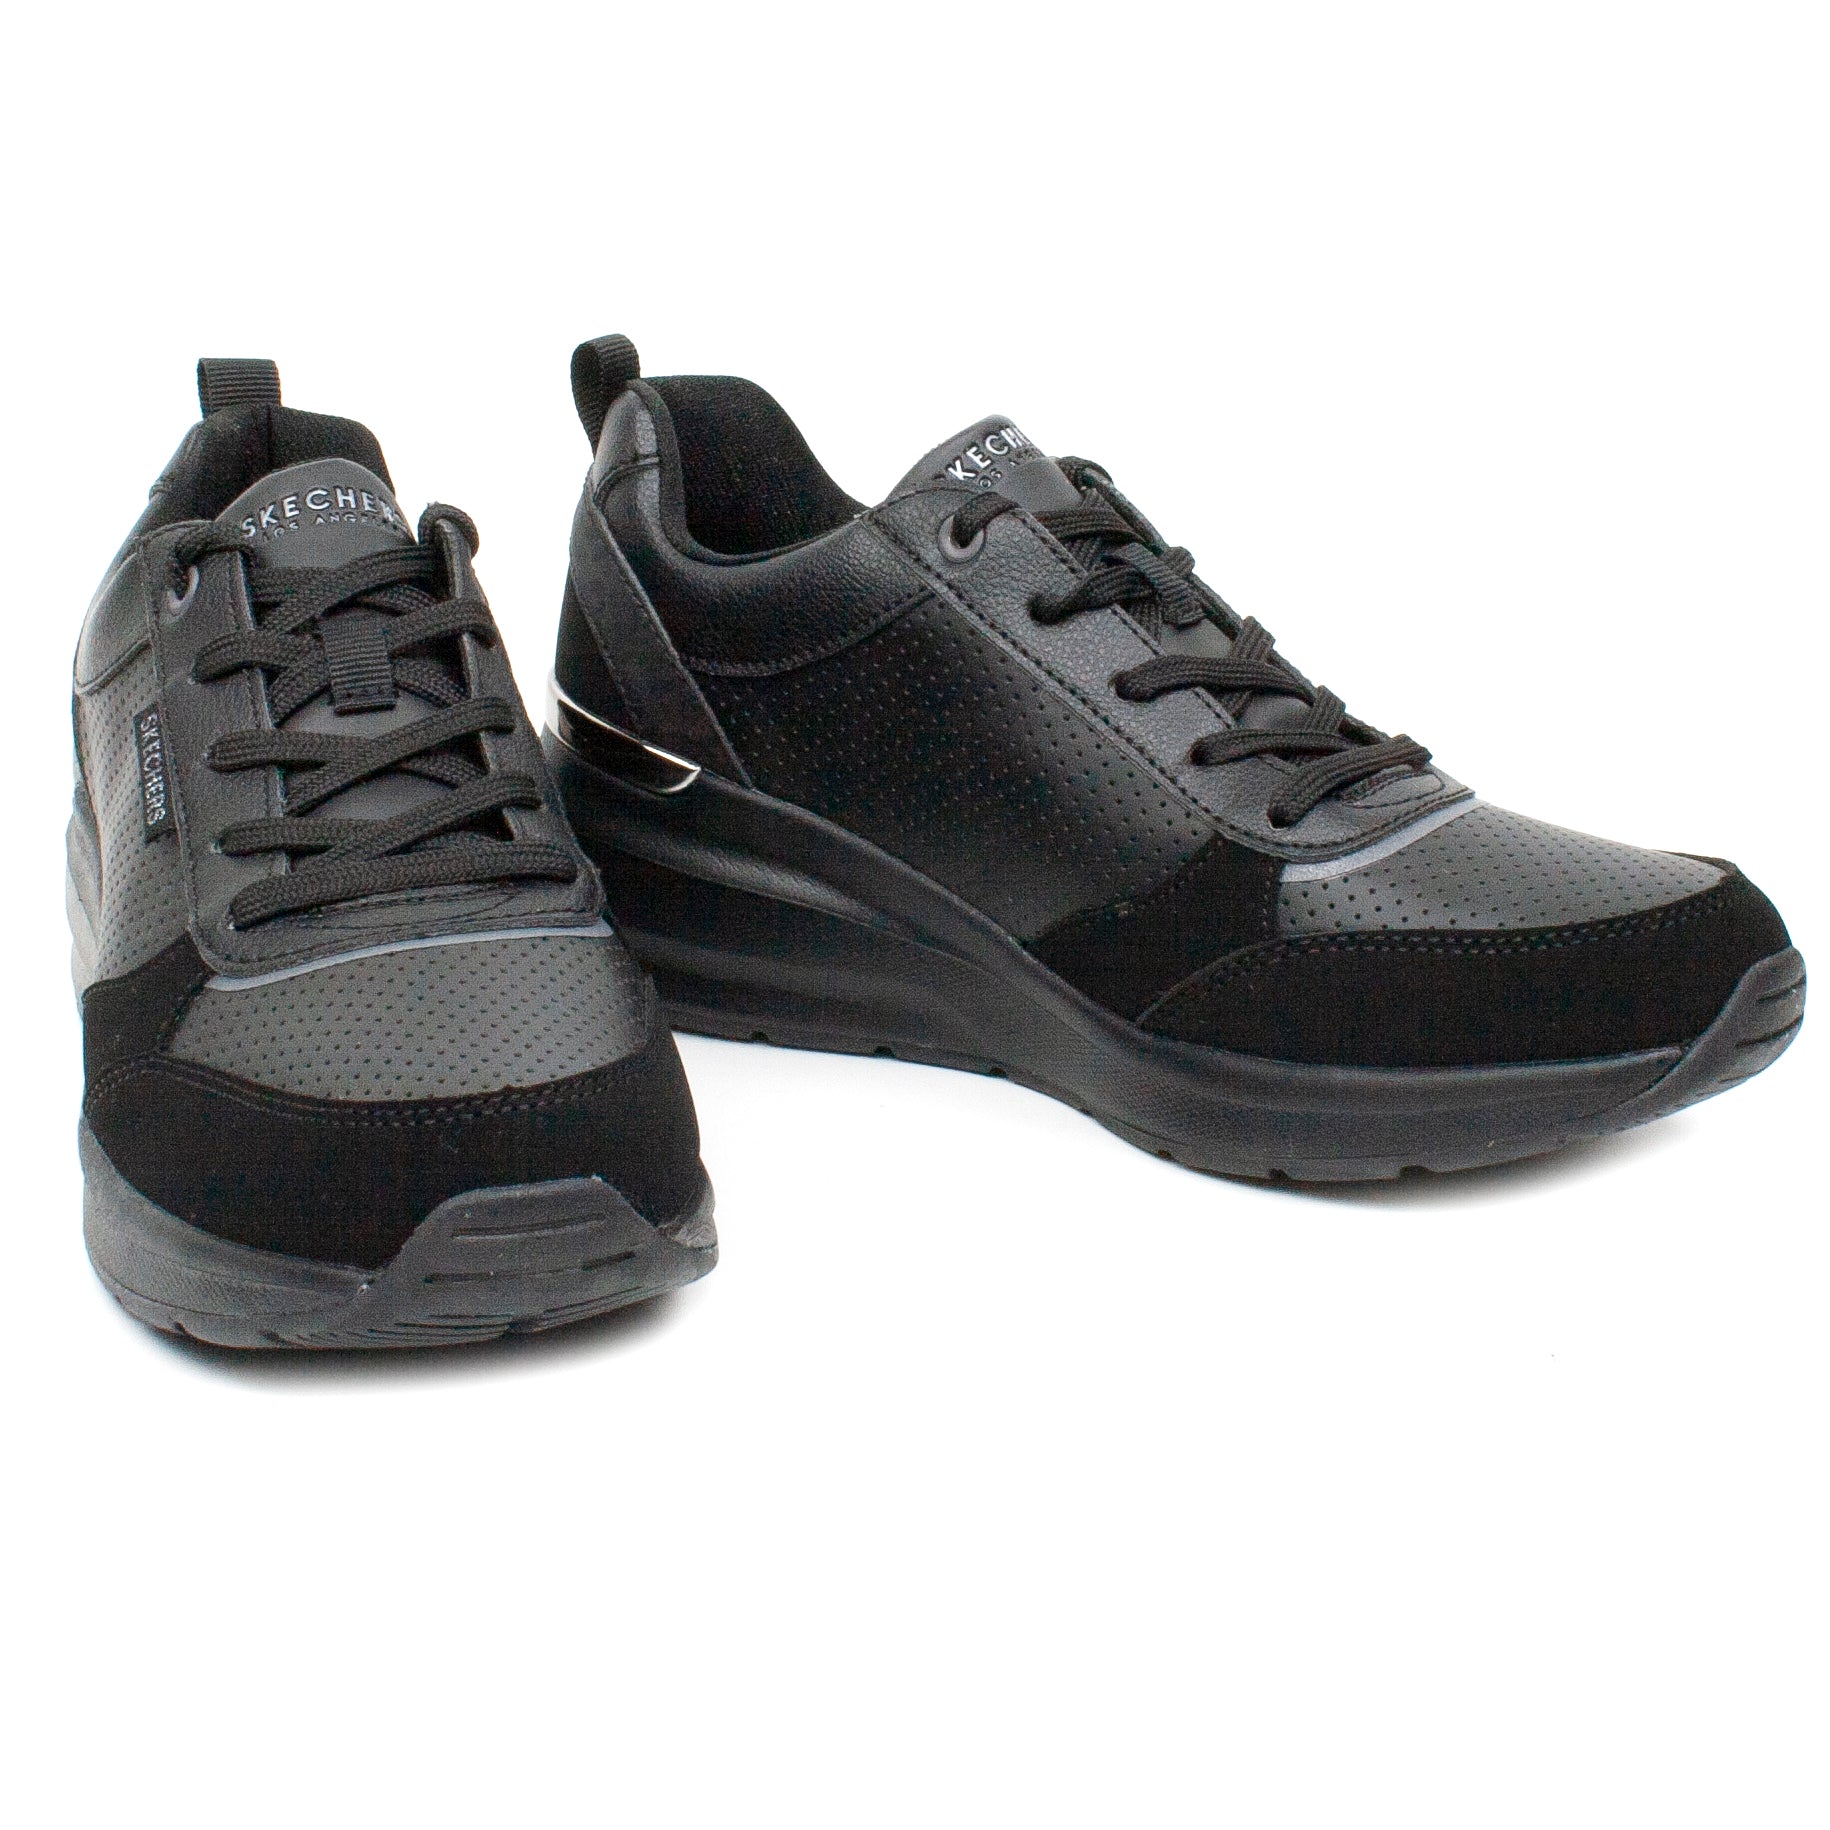 Skechers pantofi dama sport 155616 negru ID2617-NG